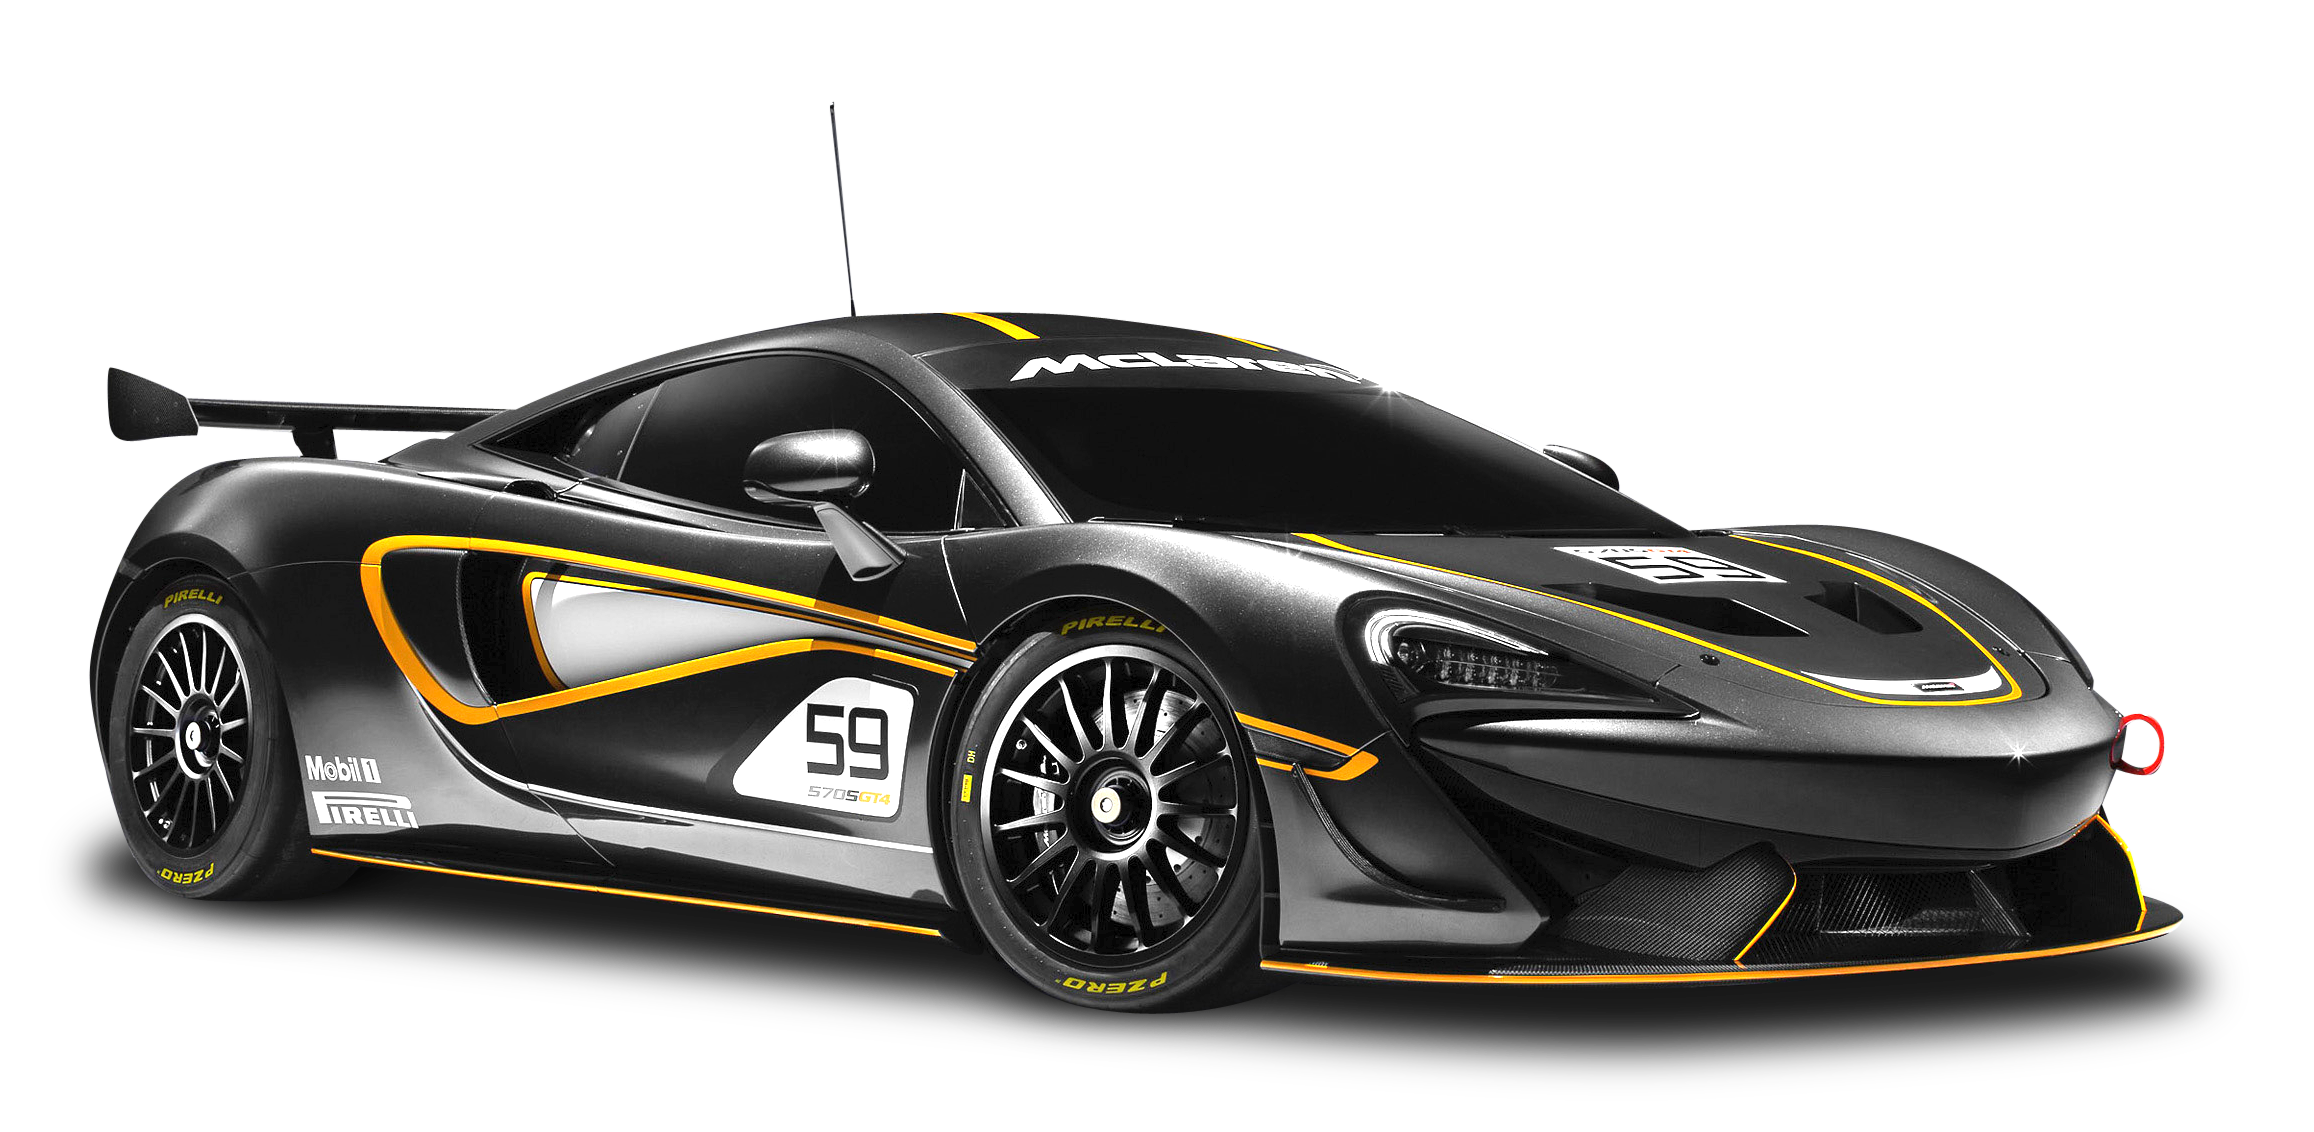 Black McLaren 570S GT4 Racing Car PNG Image - PurePNG | Free transparent CC0 PNG Image Library